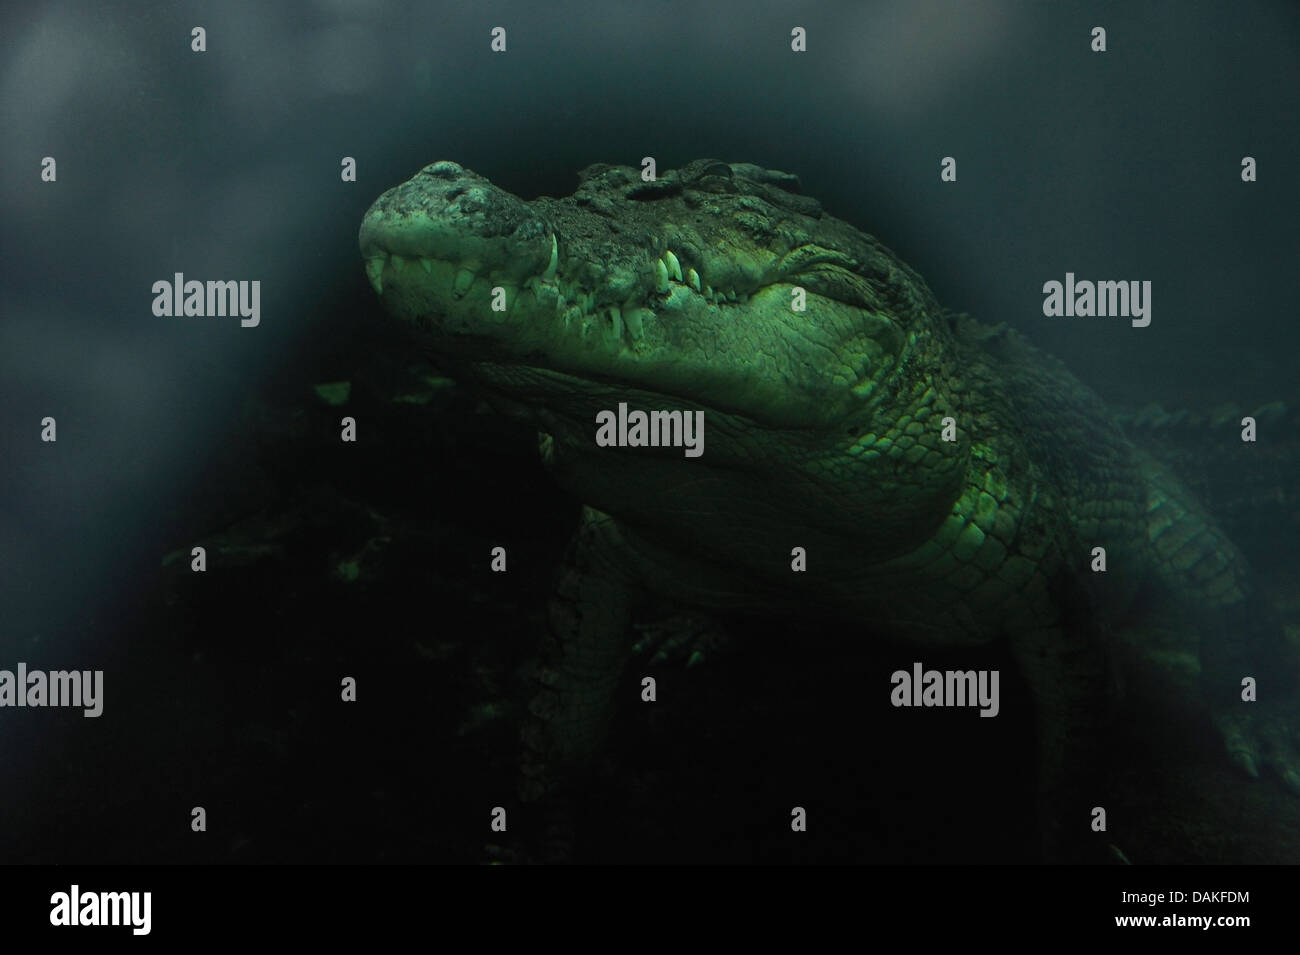 Estuarinos, el cocodrilo de agua salada (Crocodylus porosus) de Australia. Foto tomada bajo el agua. Foto de stock